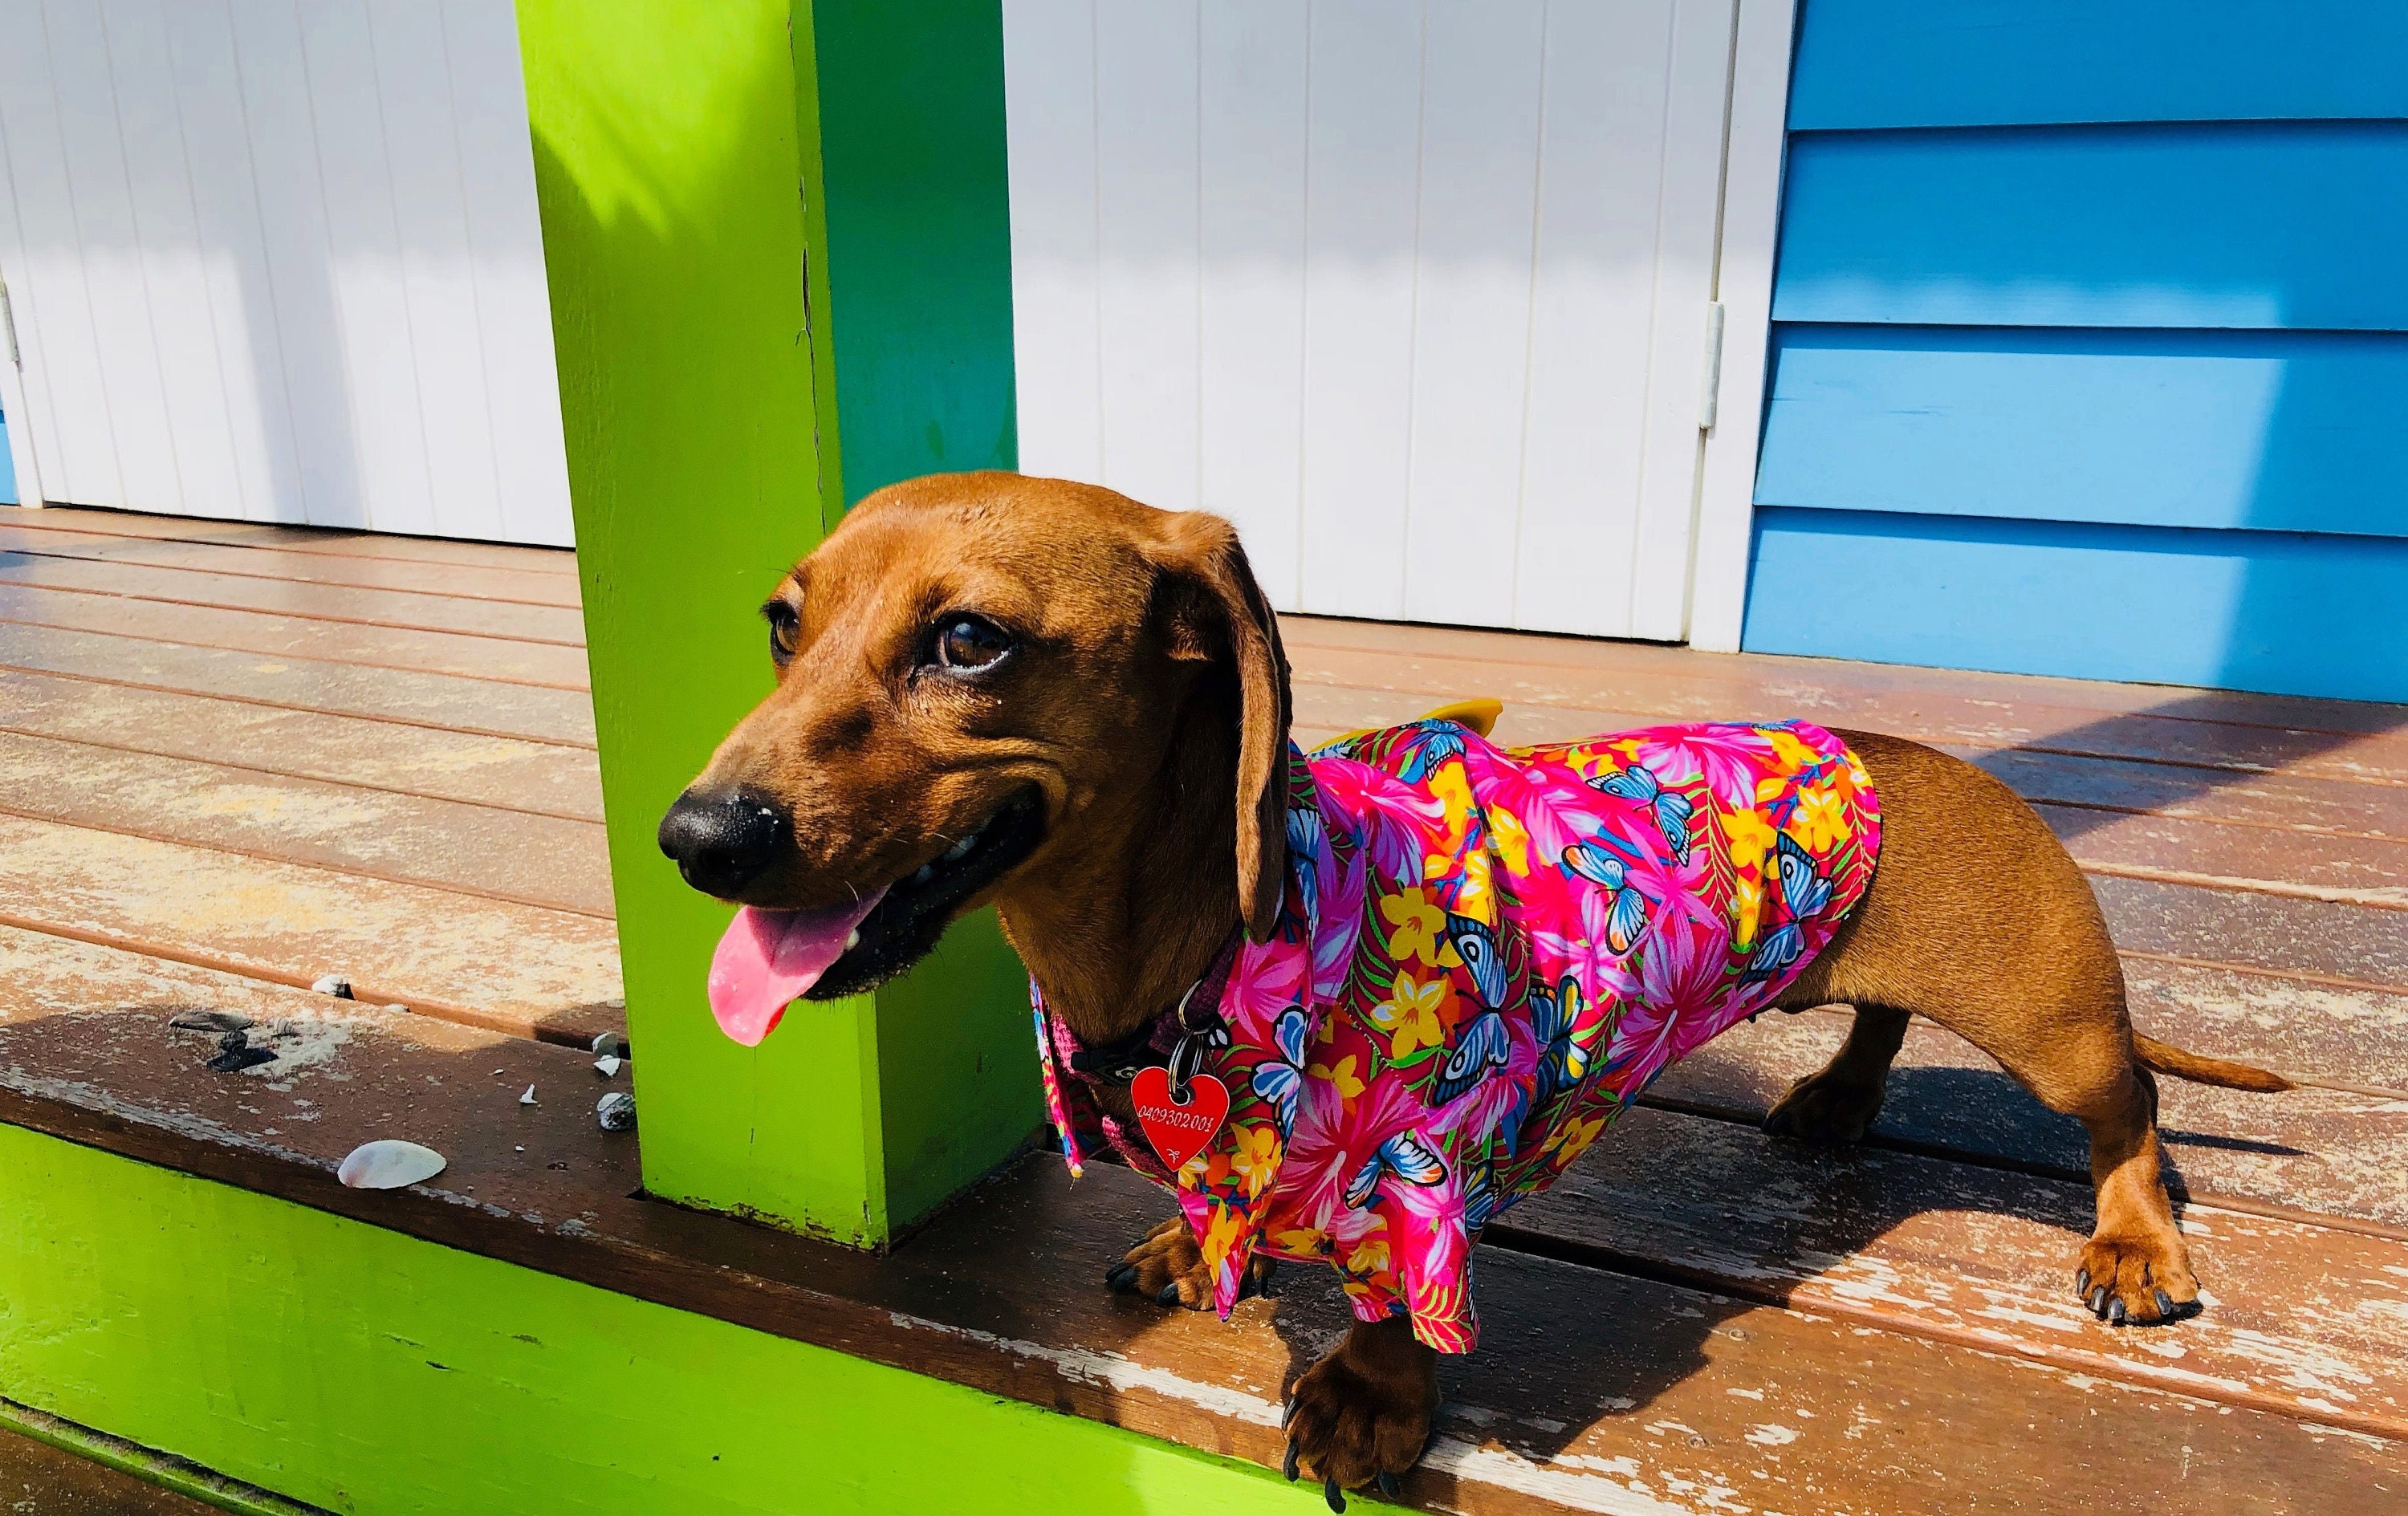 KAKALUOTE 4 Pieces Dog Shirts Pet Printed Clothes,Hawaii Style Floral Dog T- Shirt, Dog Hawaiian Shirts Cool,Puppy Shirts Breathable,Dog Beach Seaside  Shirt Sweatshirt for Dogs Cats (XL-Large) : : Pet Supplies